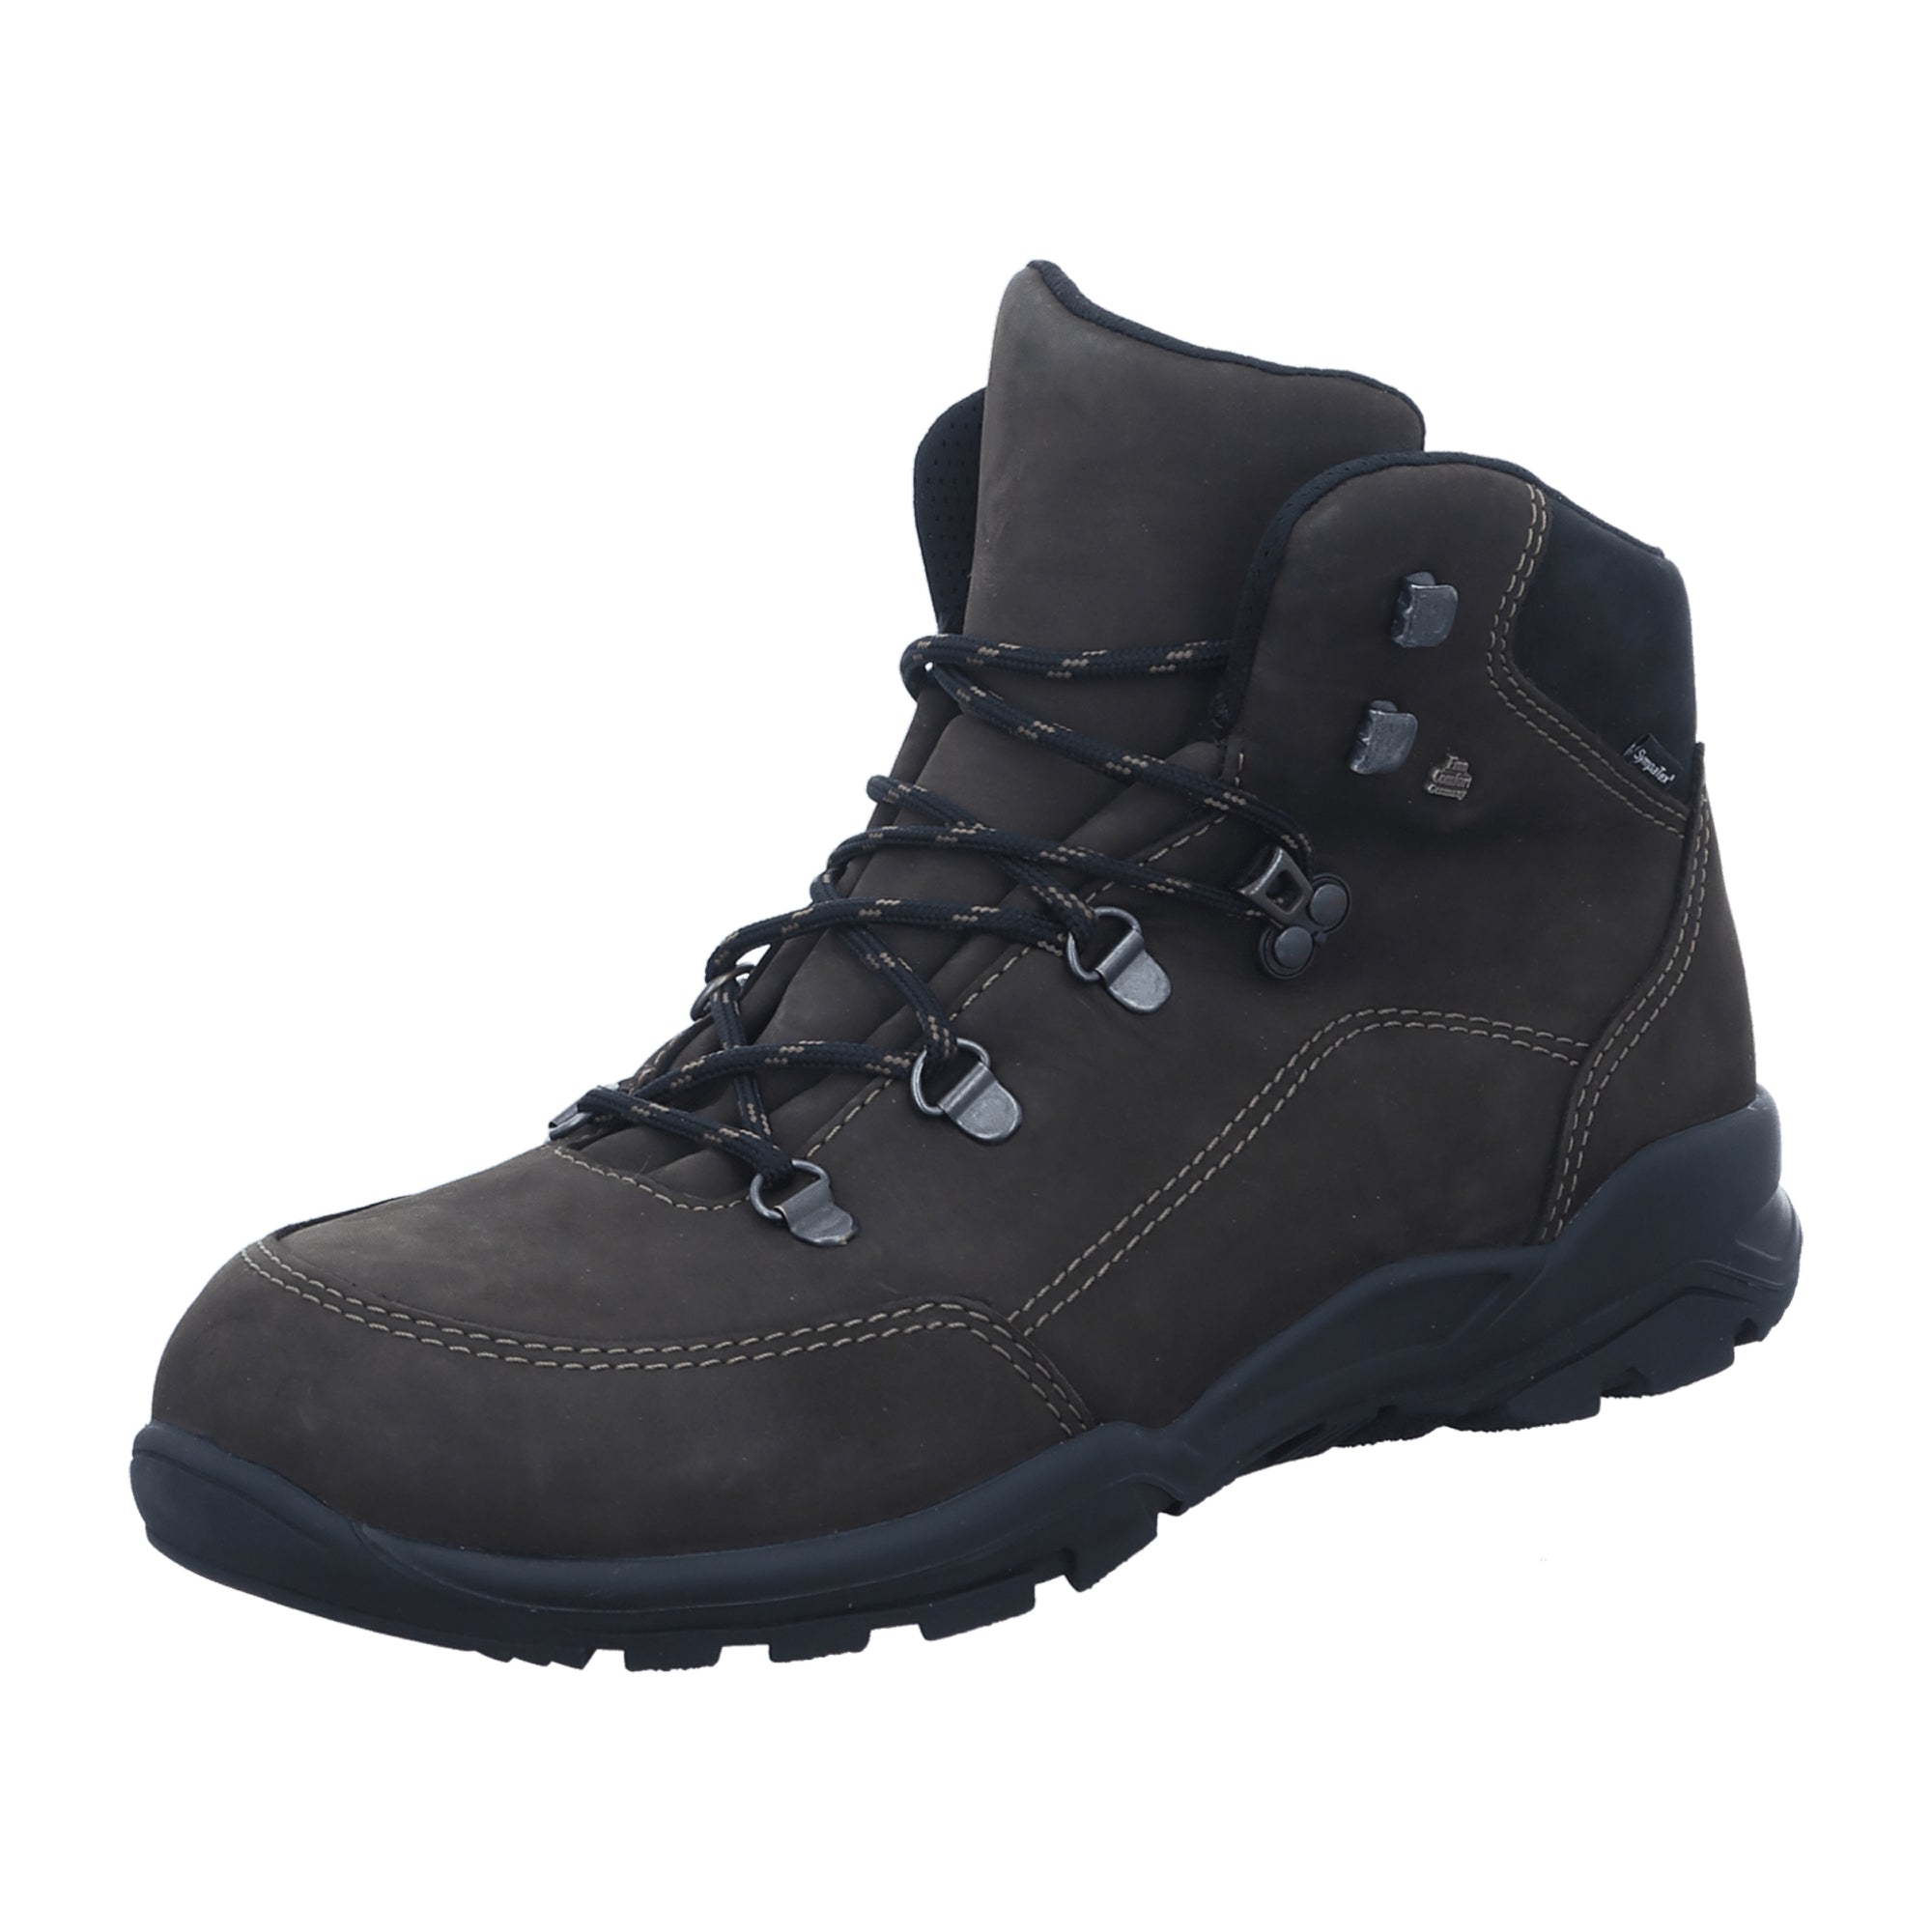 Finn Comfort Tibet Hiking Boots for Men - Durable Outdoor Footwear, Brown